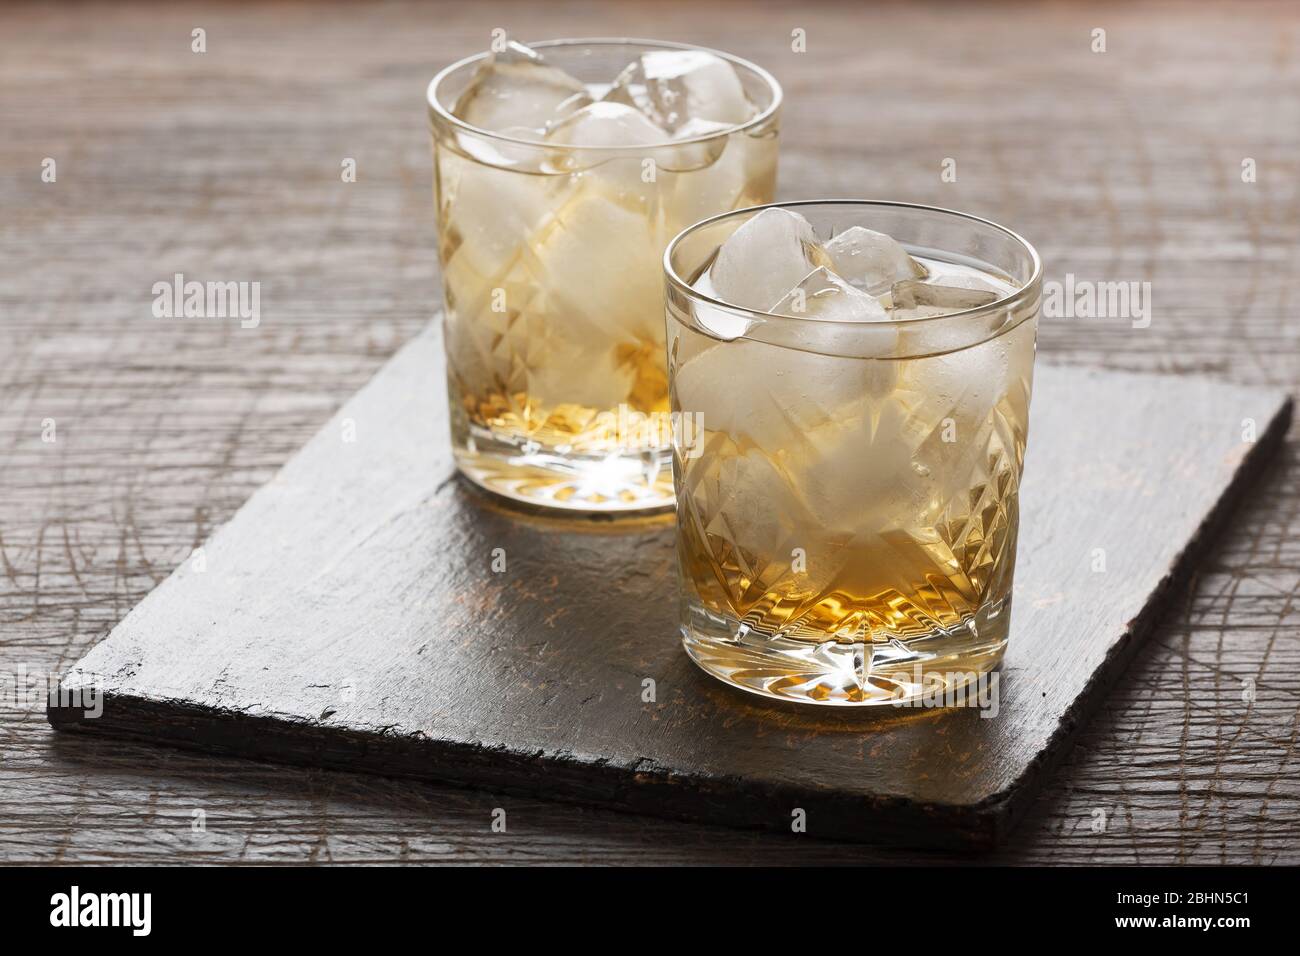 https://c8.alamy.com/comp/2BHN5C1/glass-chilled-jameson-old-fashioned-bourbon-perfect-scotch-whiskey-2BHN5C1.jpg